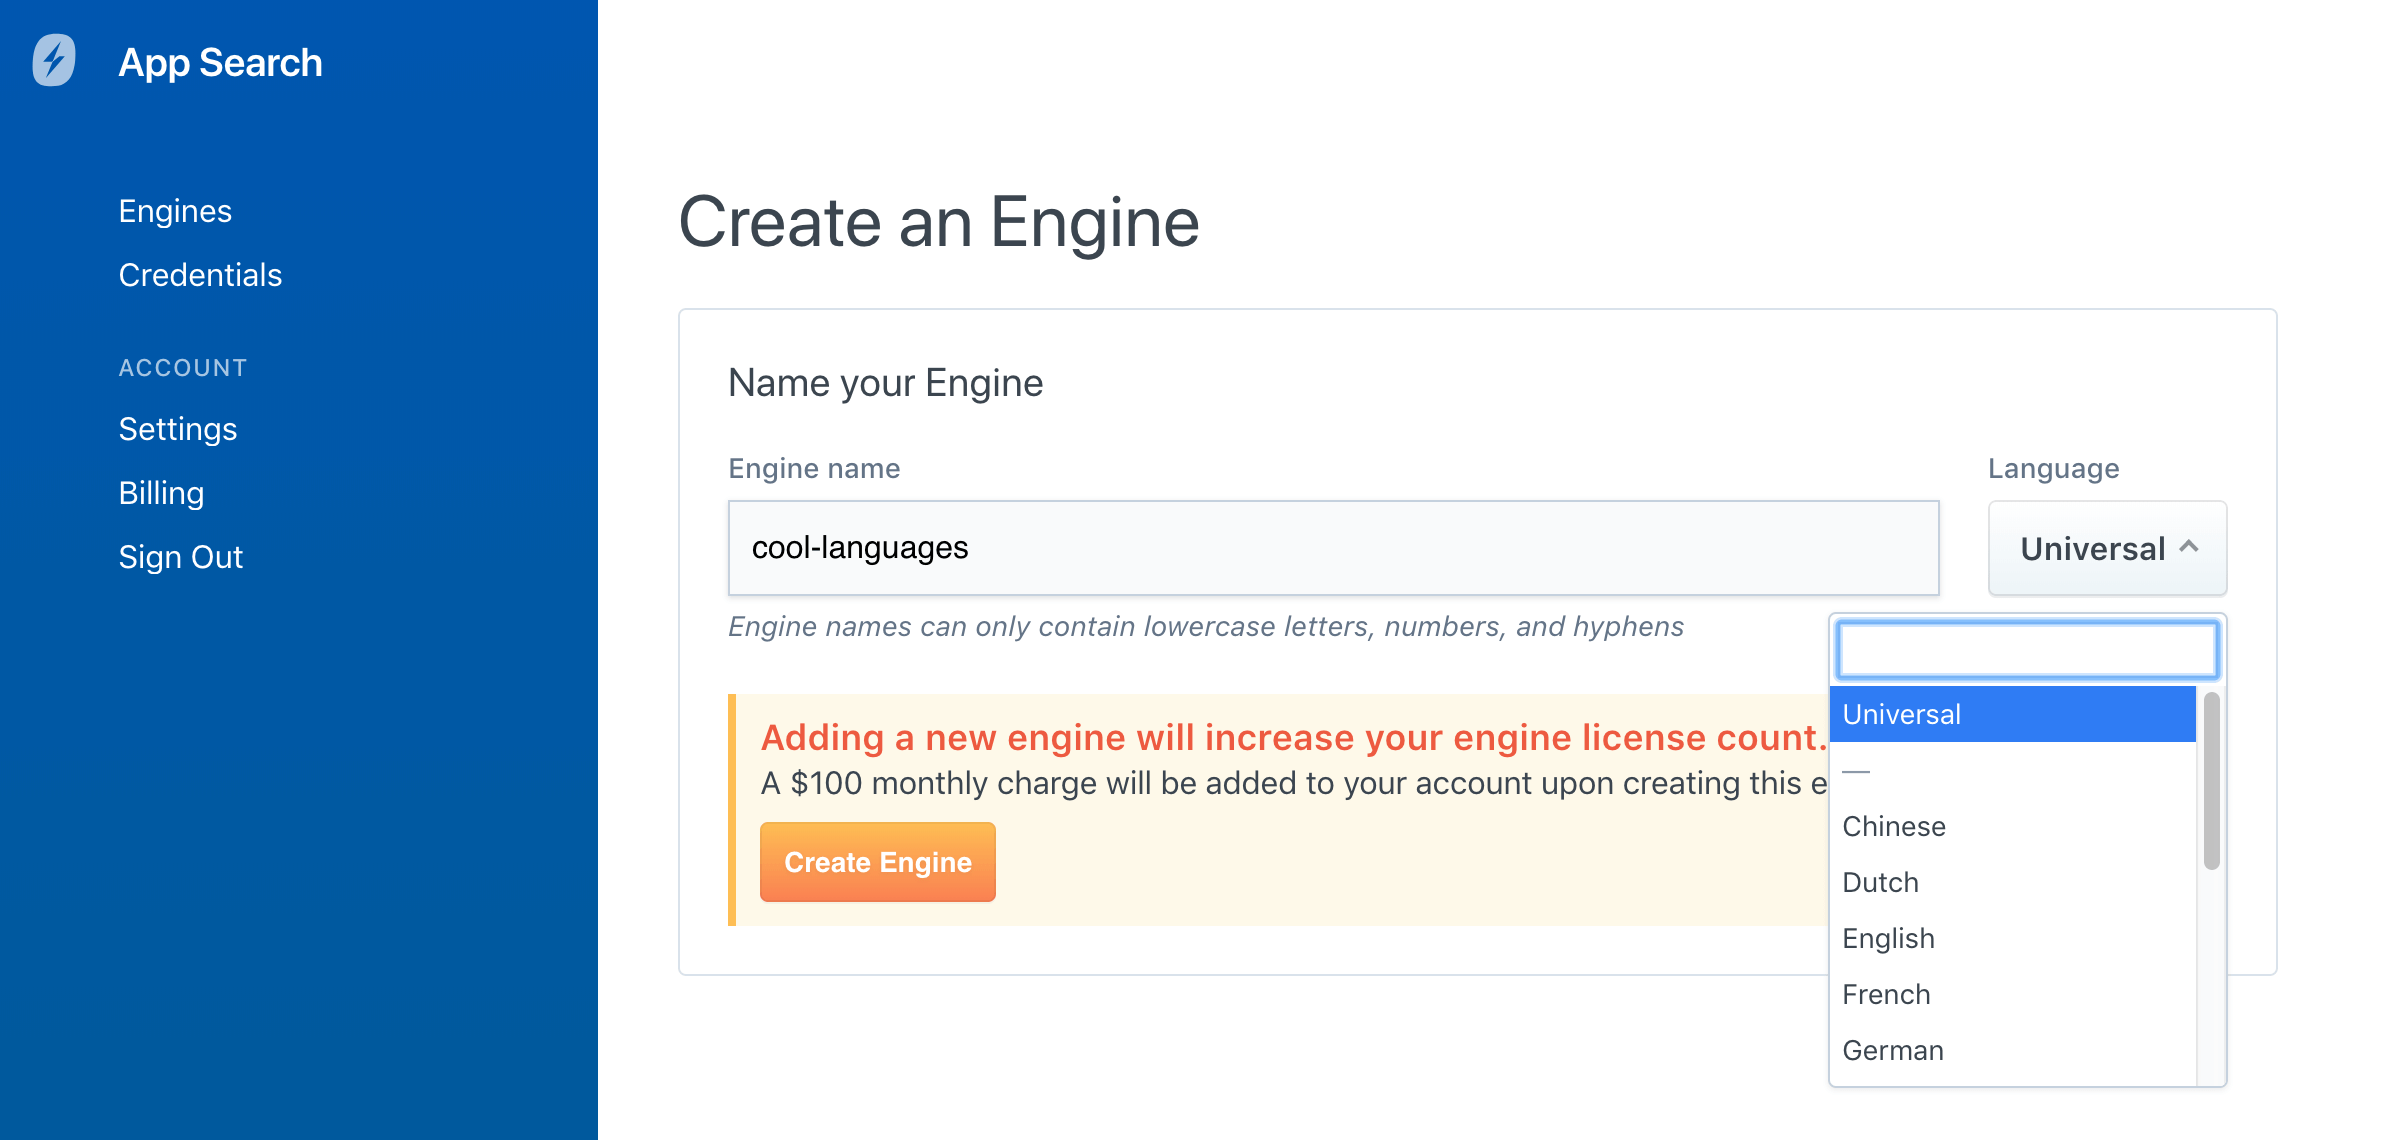 Creating an Engine